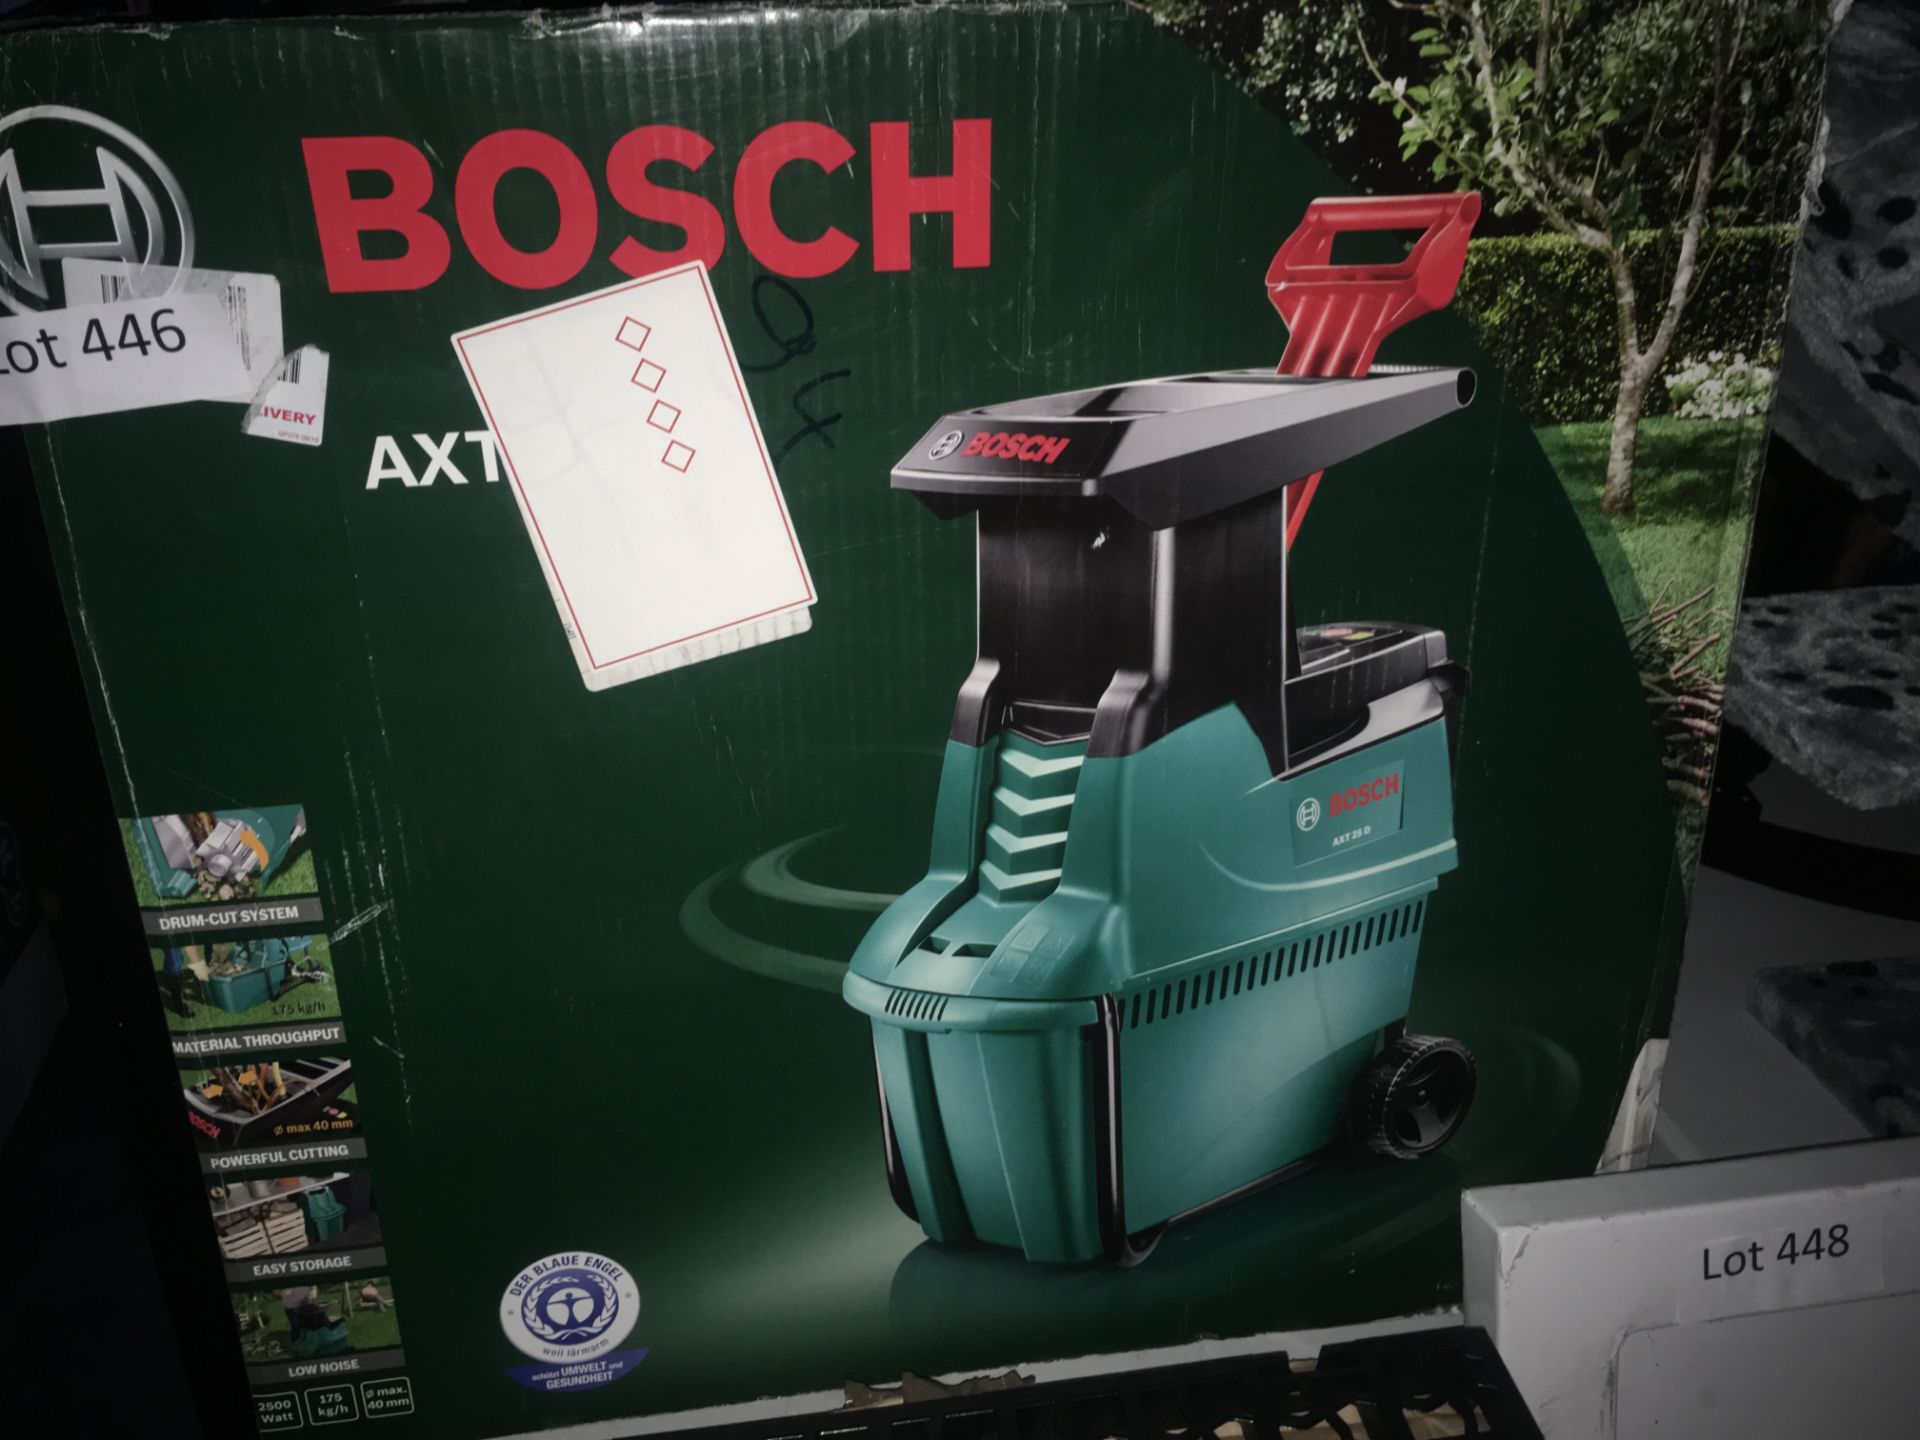 Bosch AXT25D garden shredder. RRP £200. Working customer return.